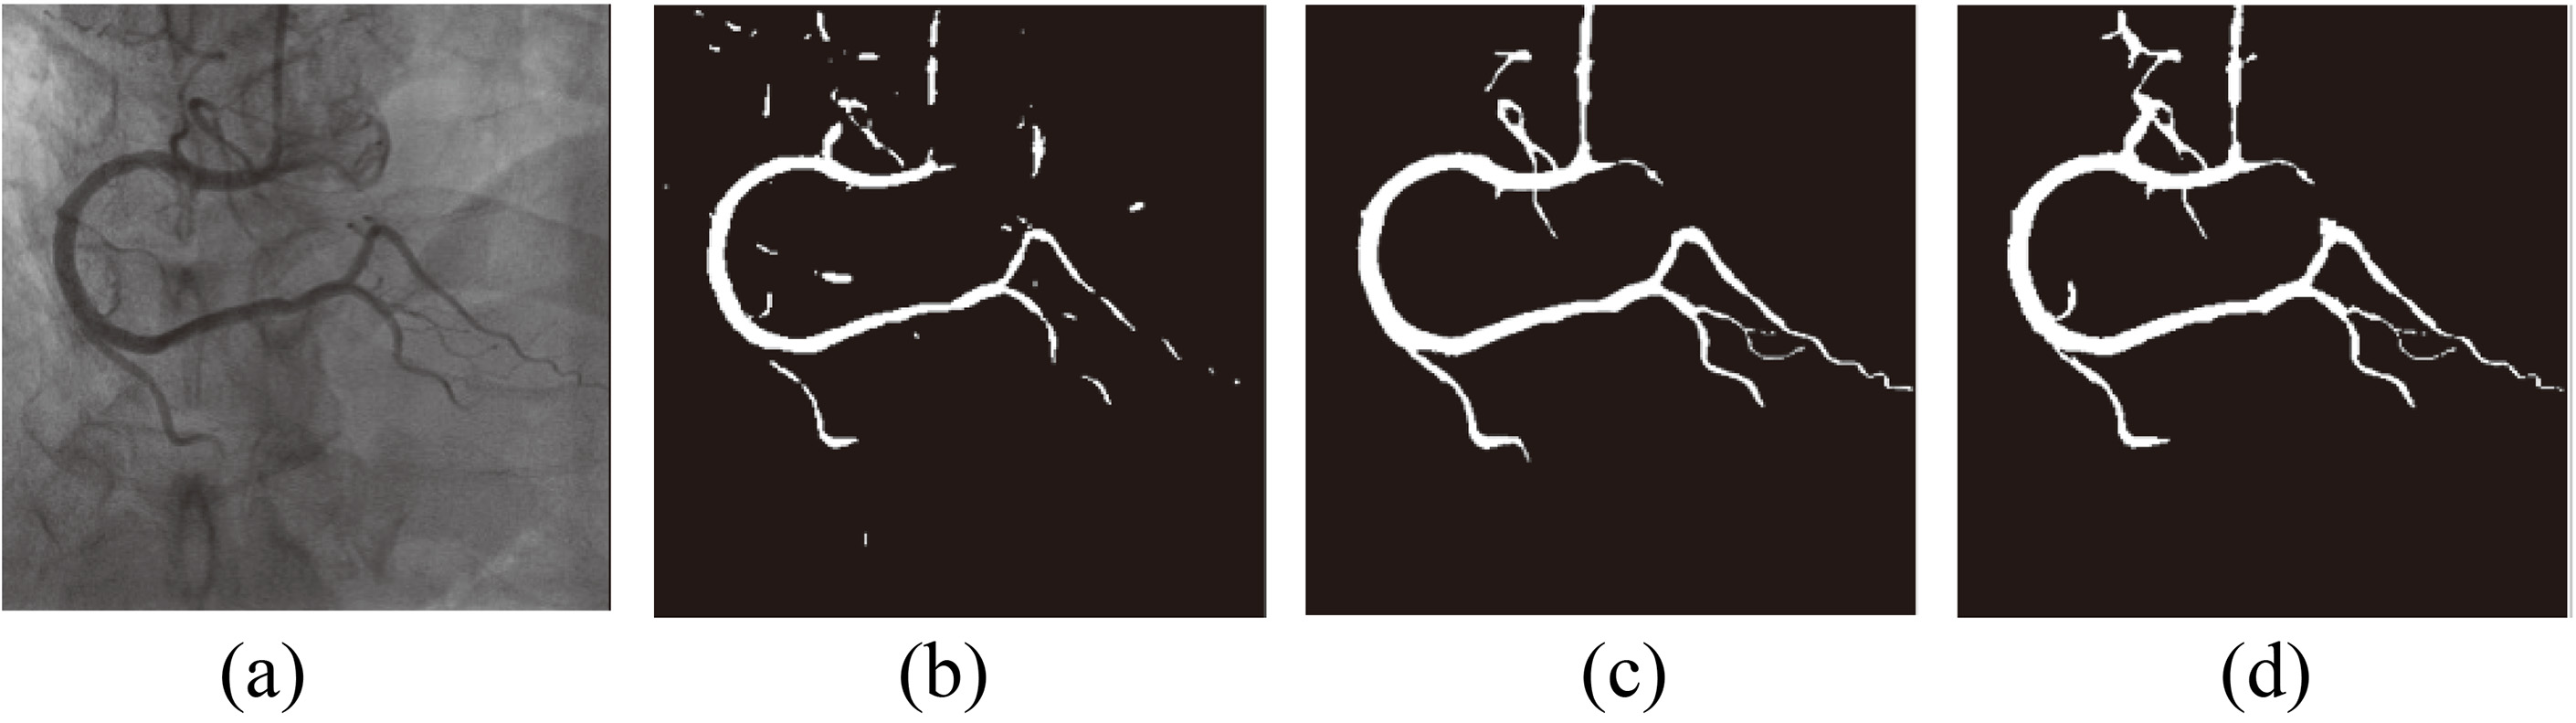 The result of the segmentation. (a) Original image; (b) Ref [10] method; (c) Ref [12] method; (d) Proposed method.